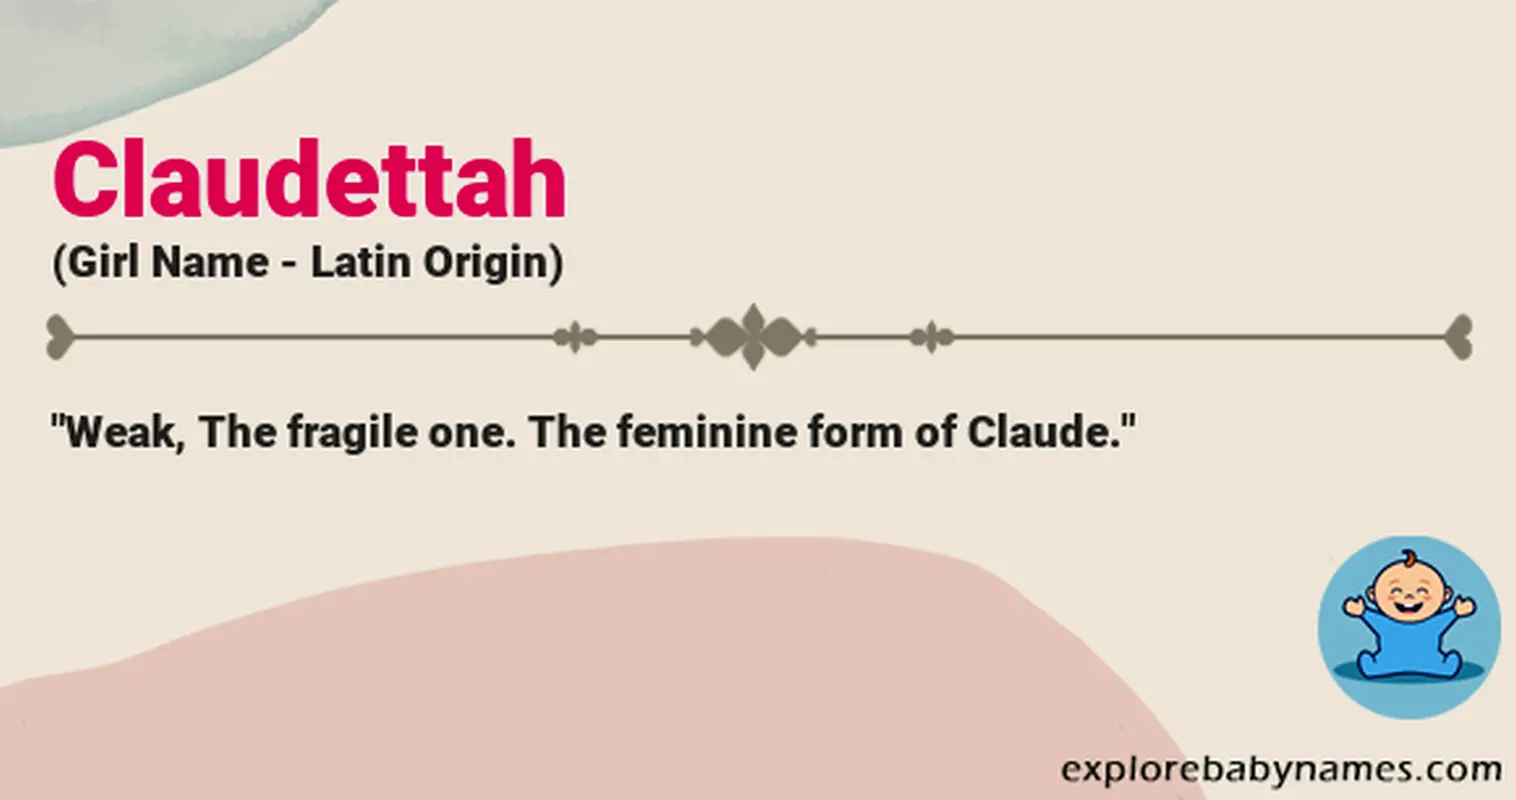 Meaning of Claudettah